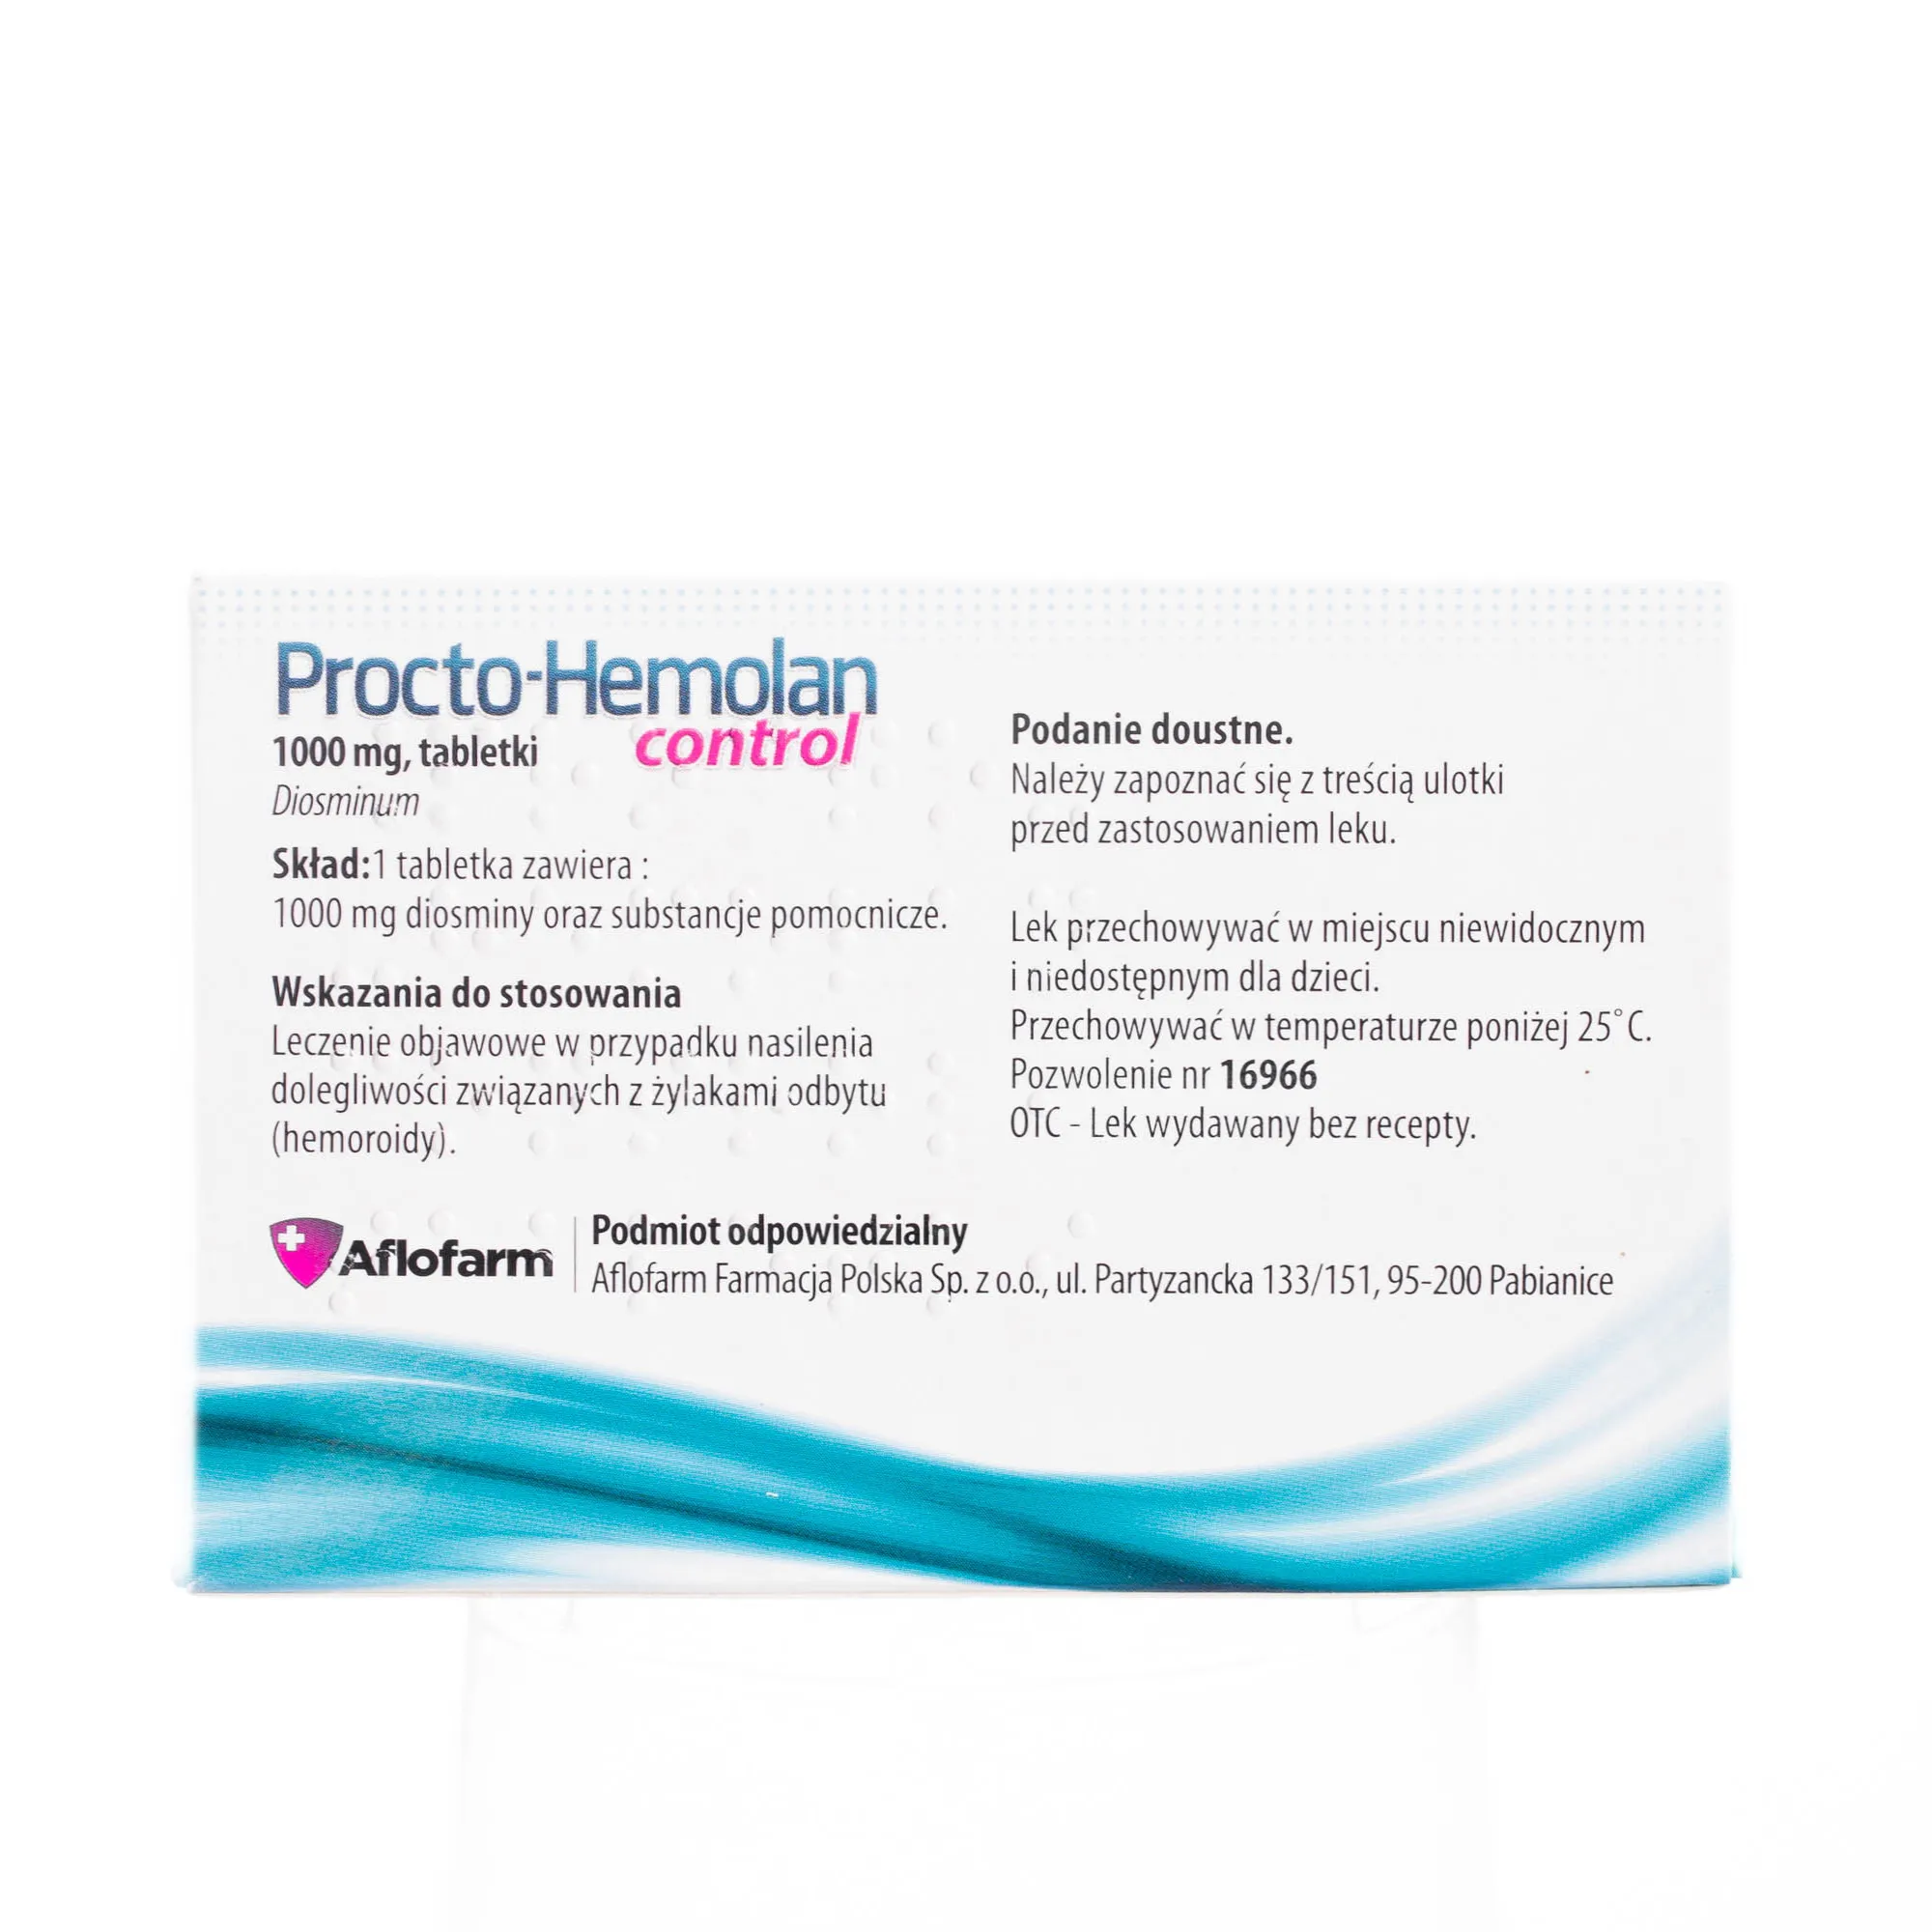 Procto-Hemolan control, Diosminum 1000 mg, 20 tabletek 